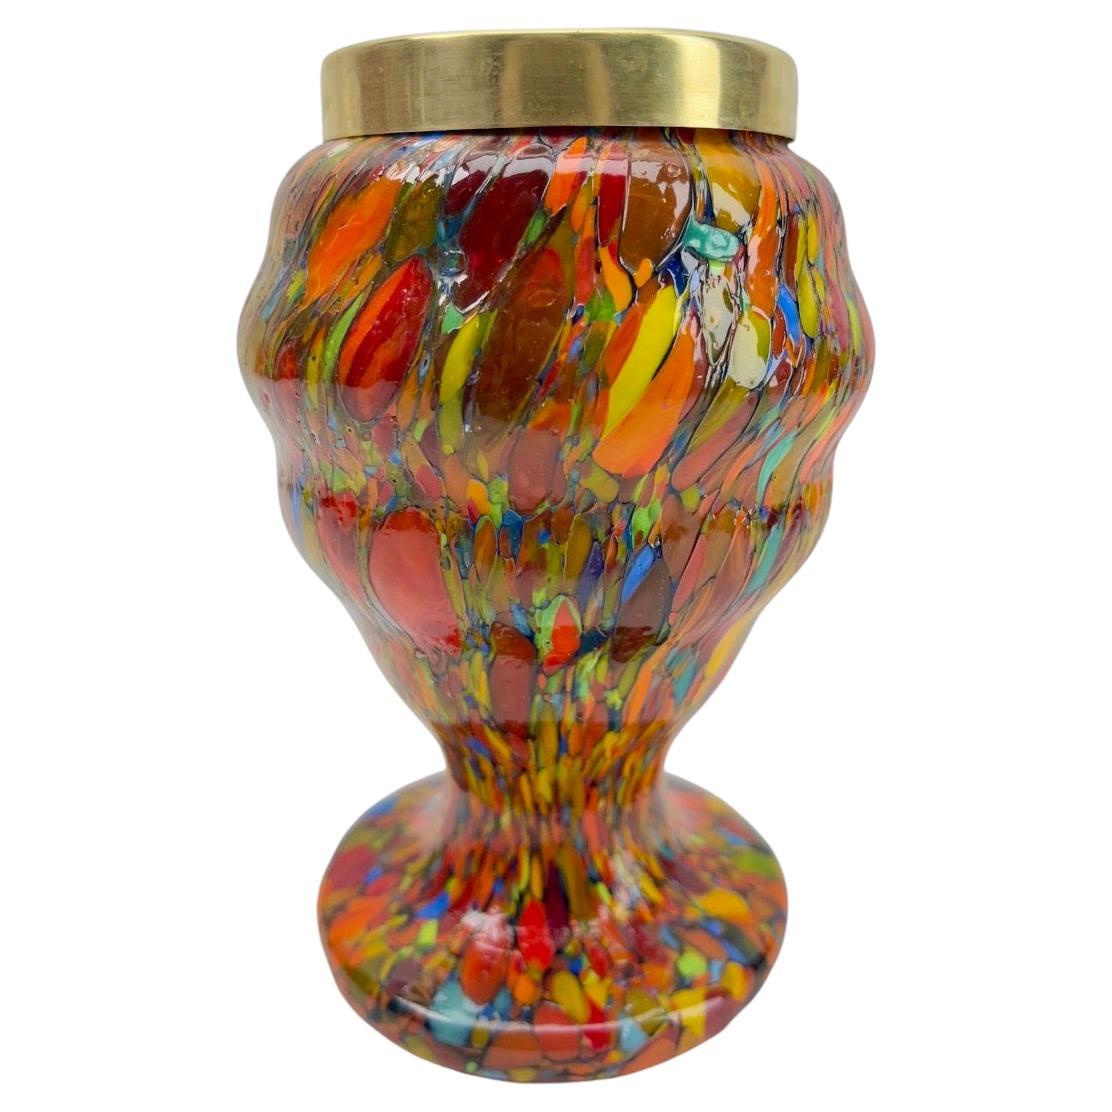 Kralik 'Pique Fleurs'  Vase, in Multi Color Decor with Grille, Late 1930s For Sale